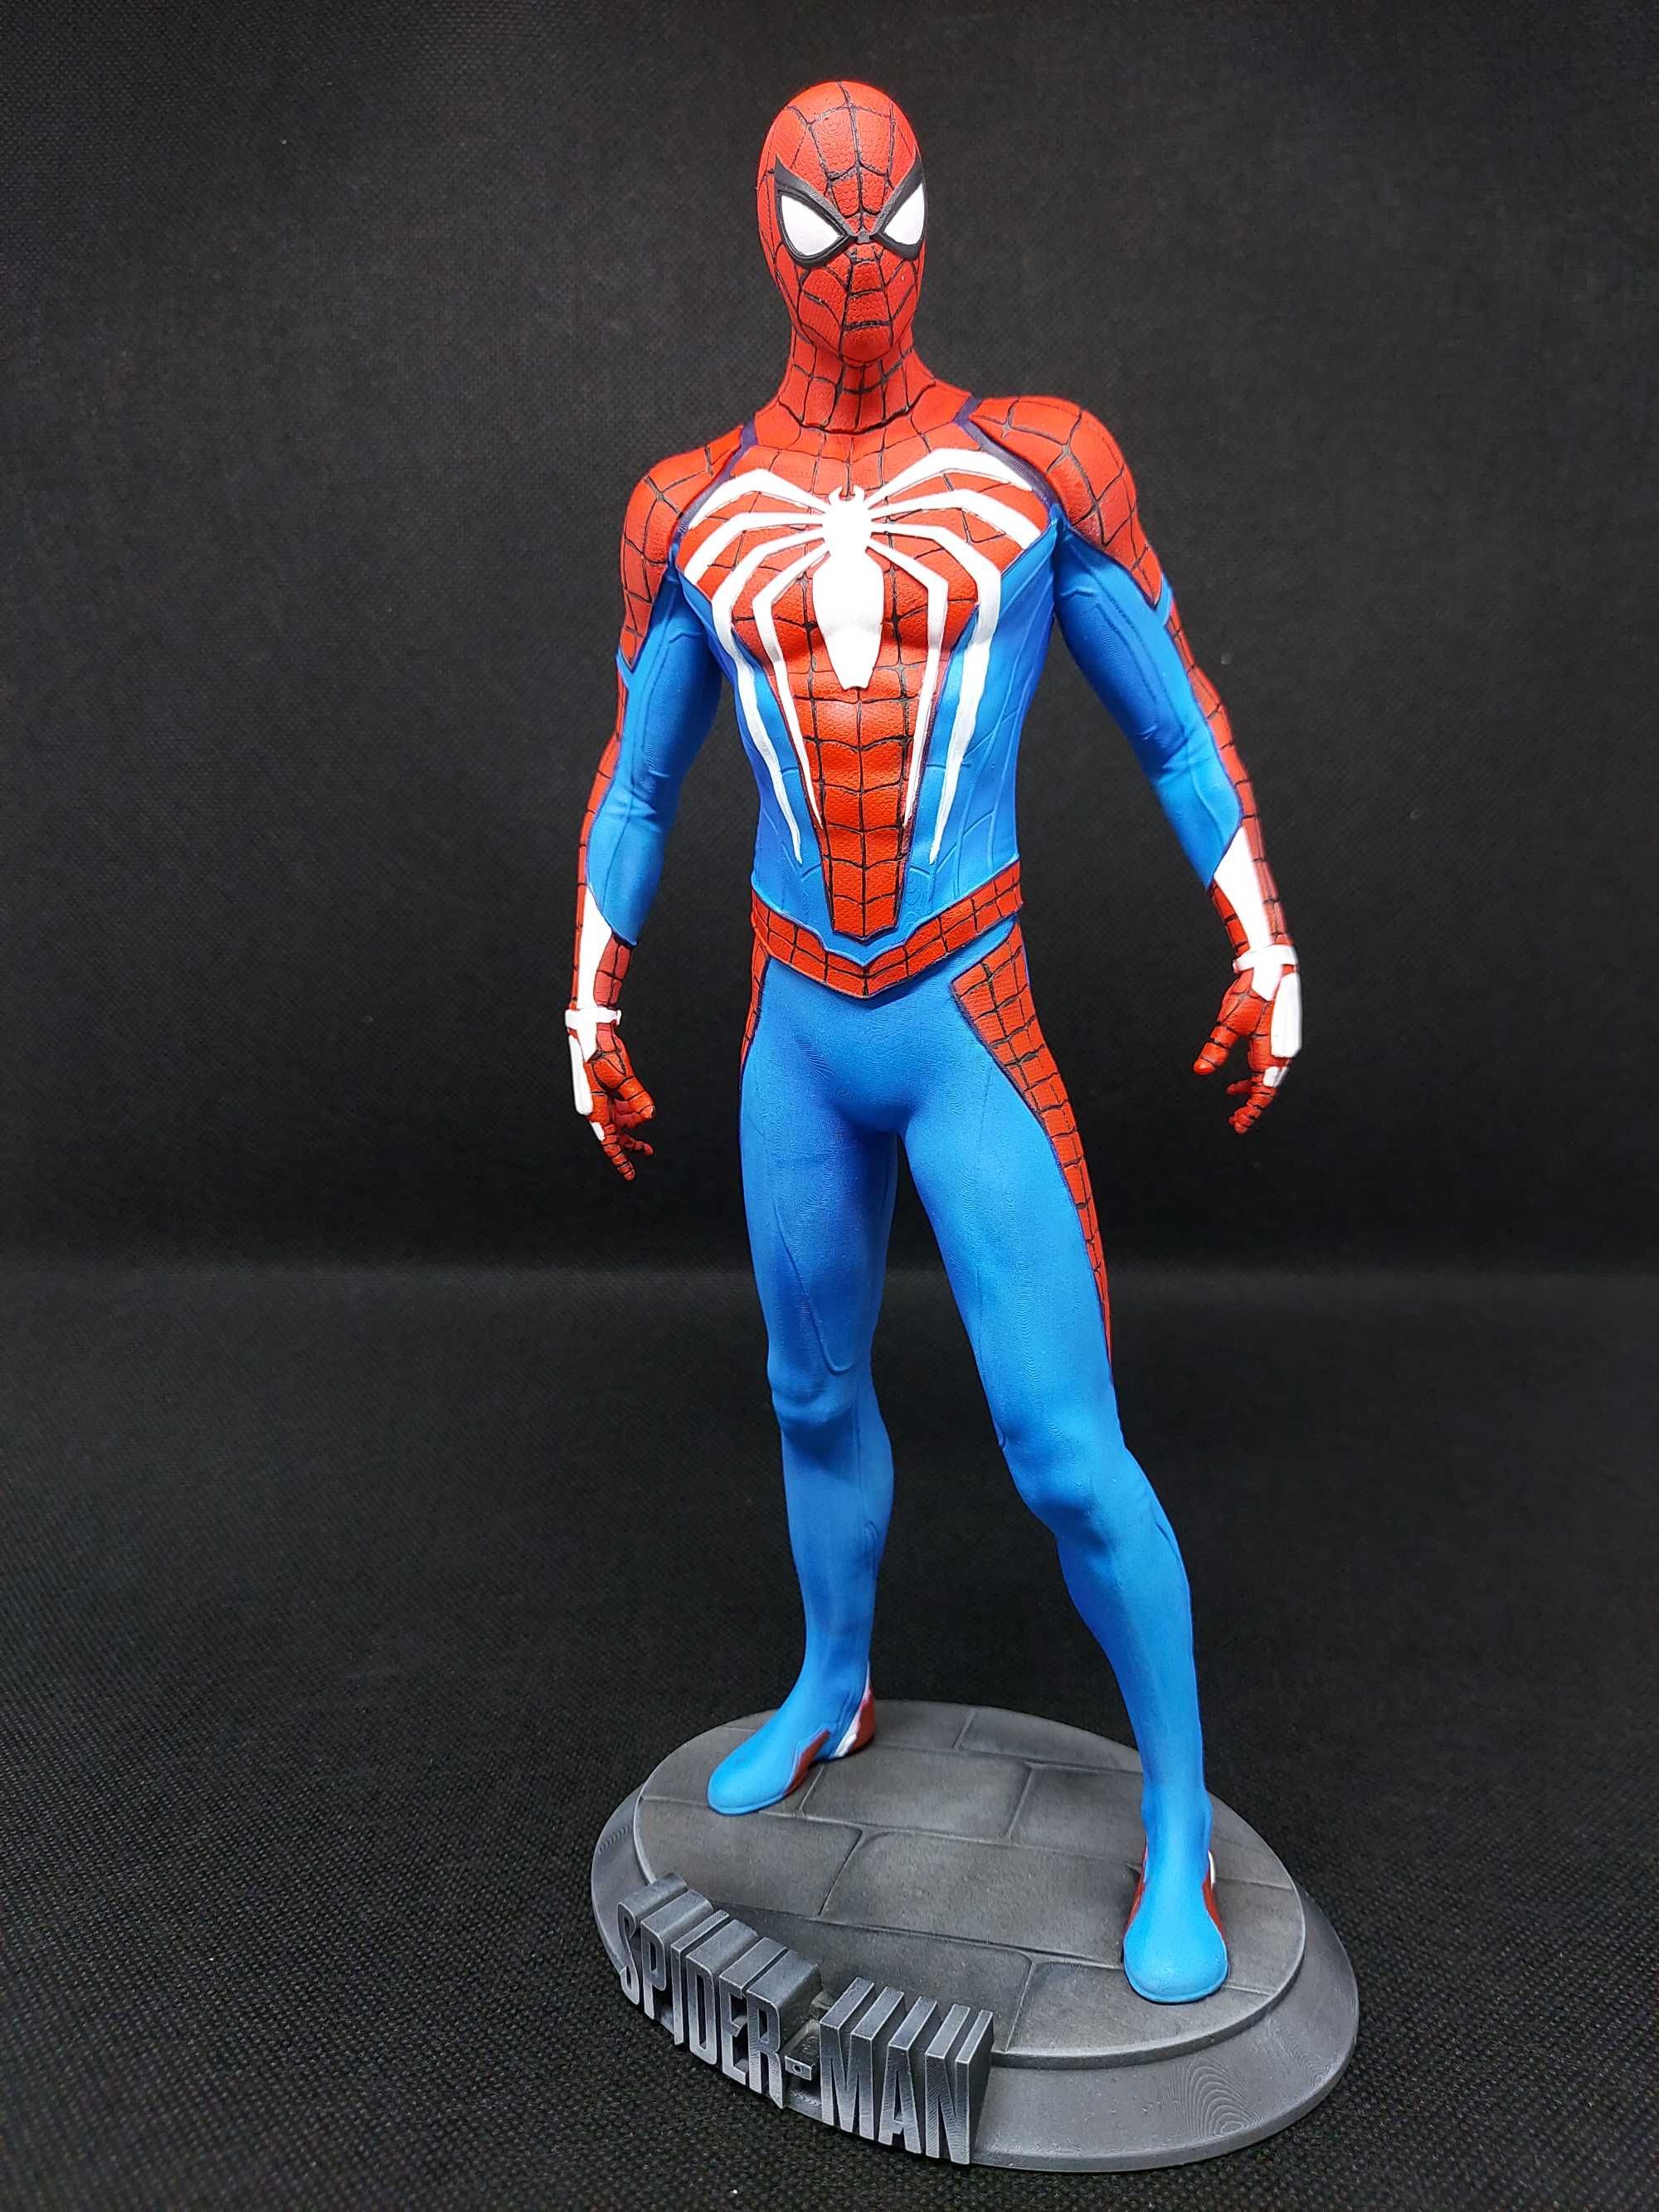 Spider-Man ADVANCED SUIT impressão 3d Custom promo natal